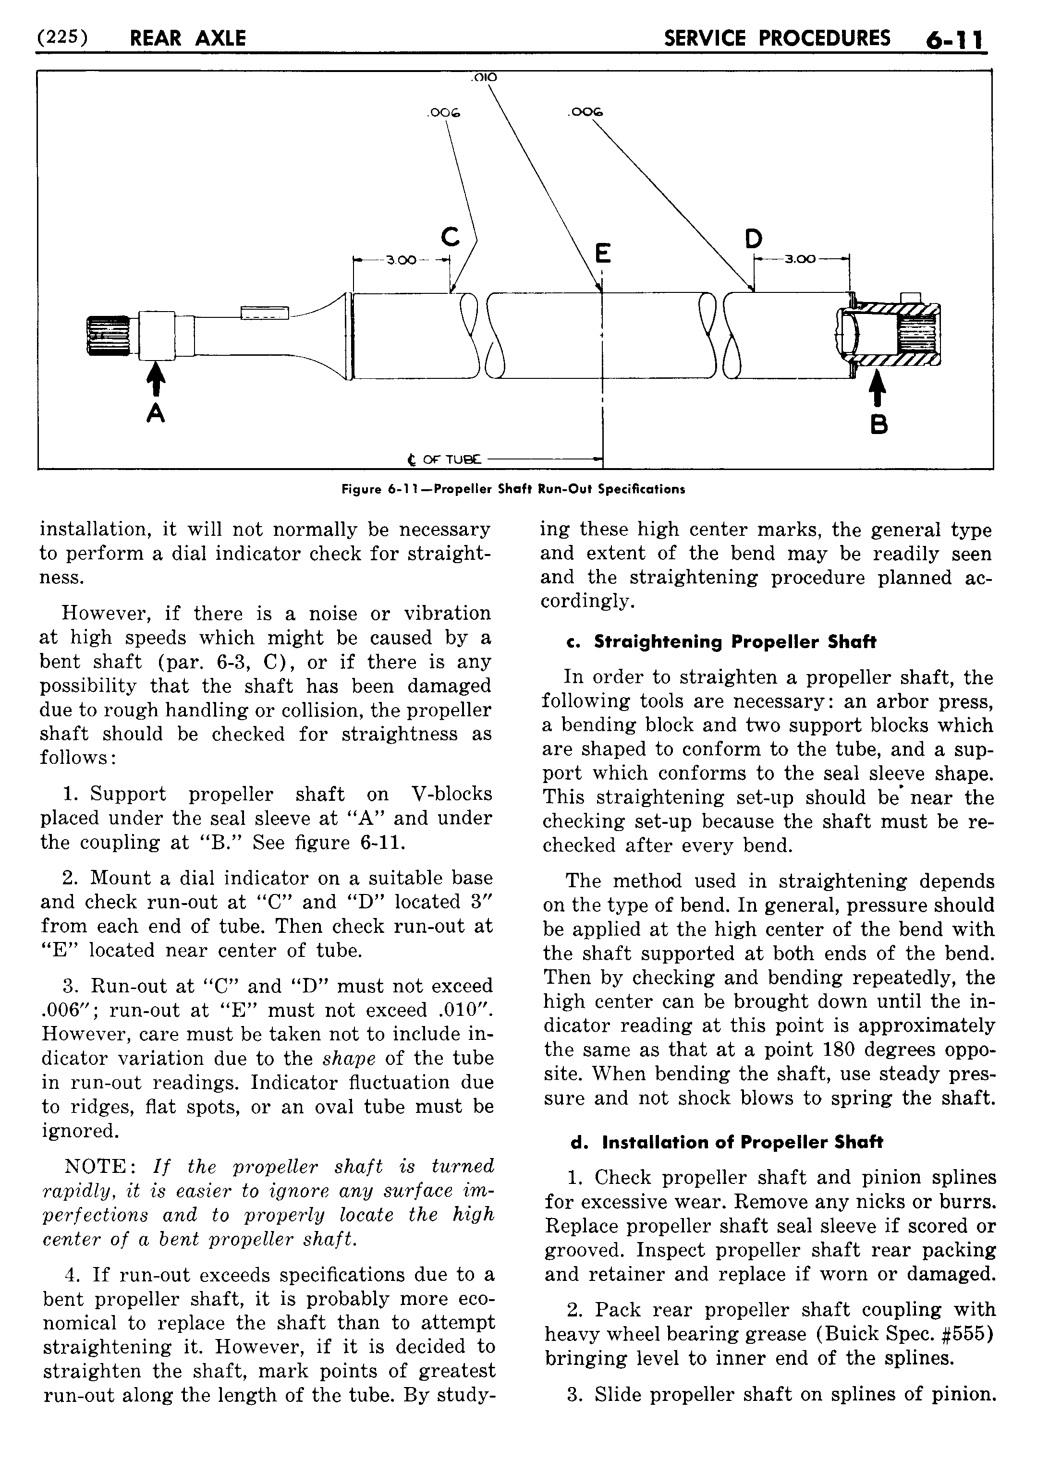 n_07 1956 Buick Shop Manual - Rear Axle-011-011.jpg